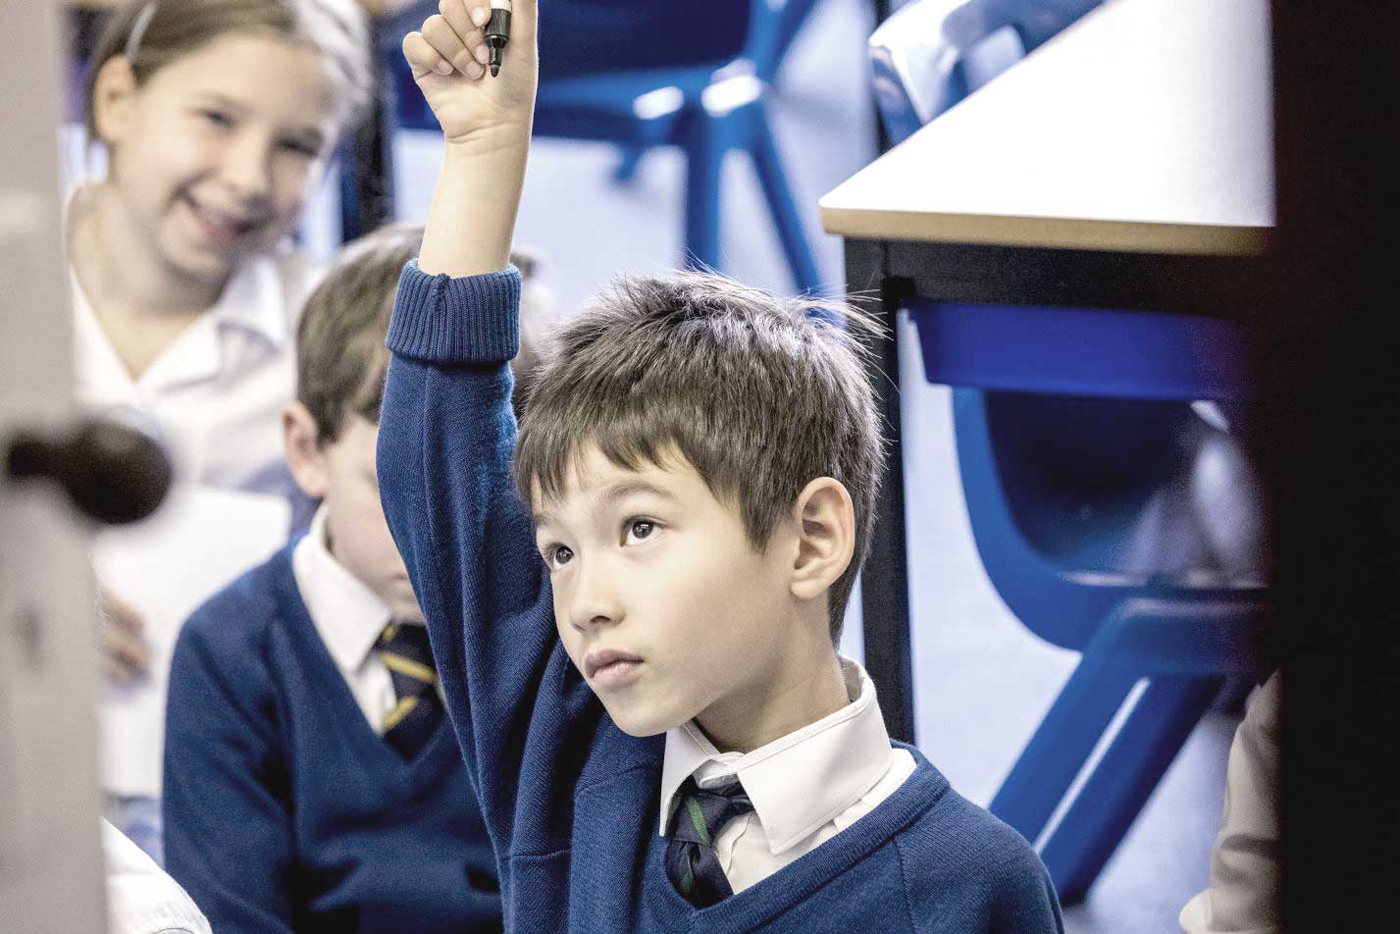 boy in class raising his hand